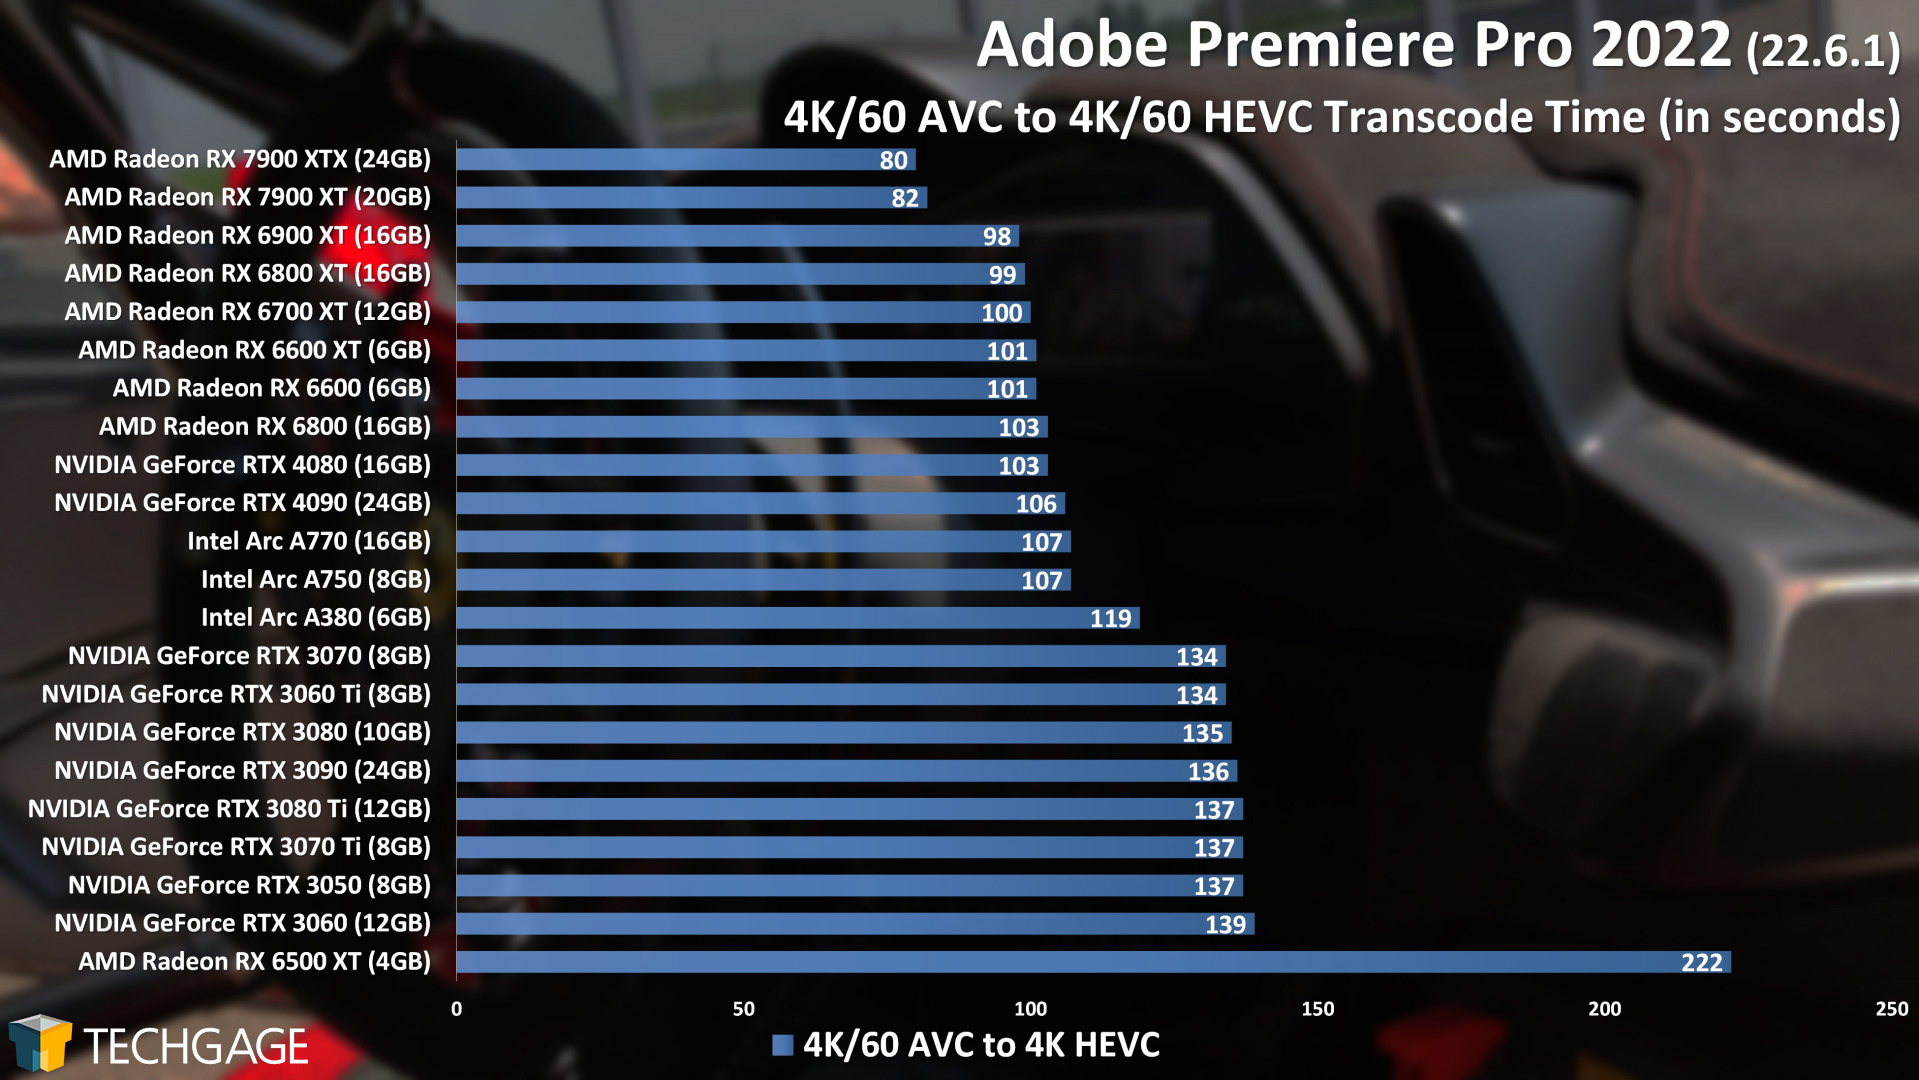 Adobe Premiere Pro 2022 - 4K60 AVC to HEVC GPU Encode Performance (AMD Radeon RX 7900 XT and XTX)